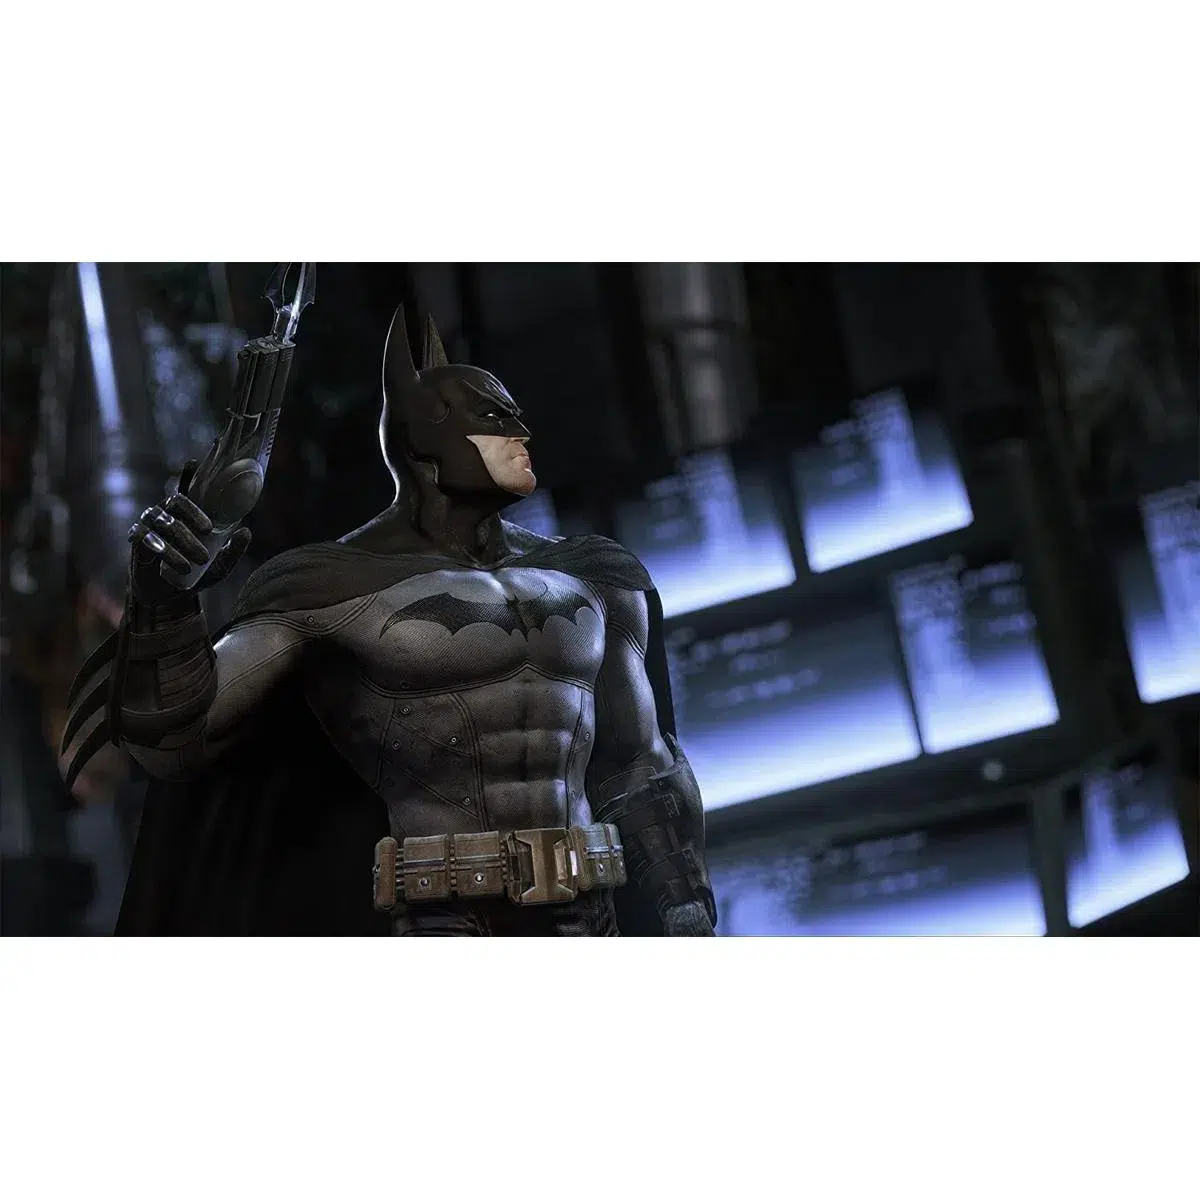 Batman Return to Arkham (PS4) – GameStop em Trieste – Itália - Skooter Blog